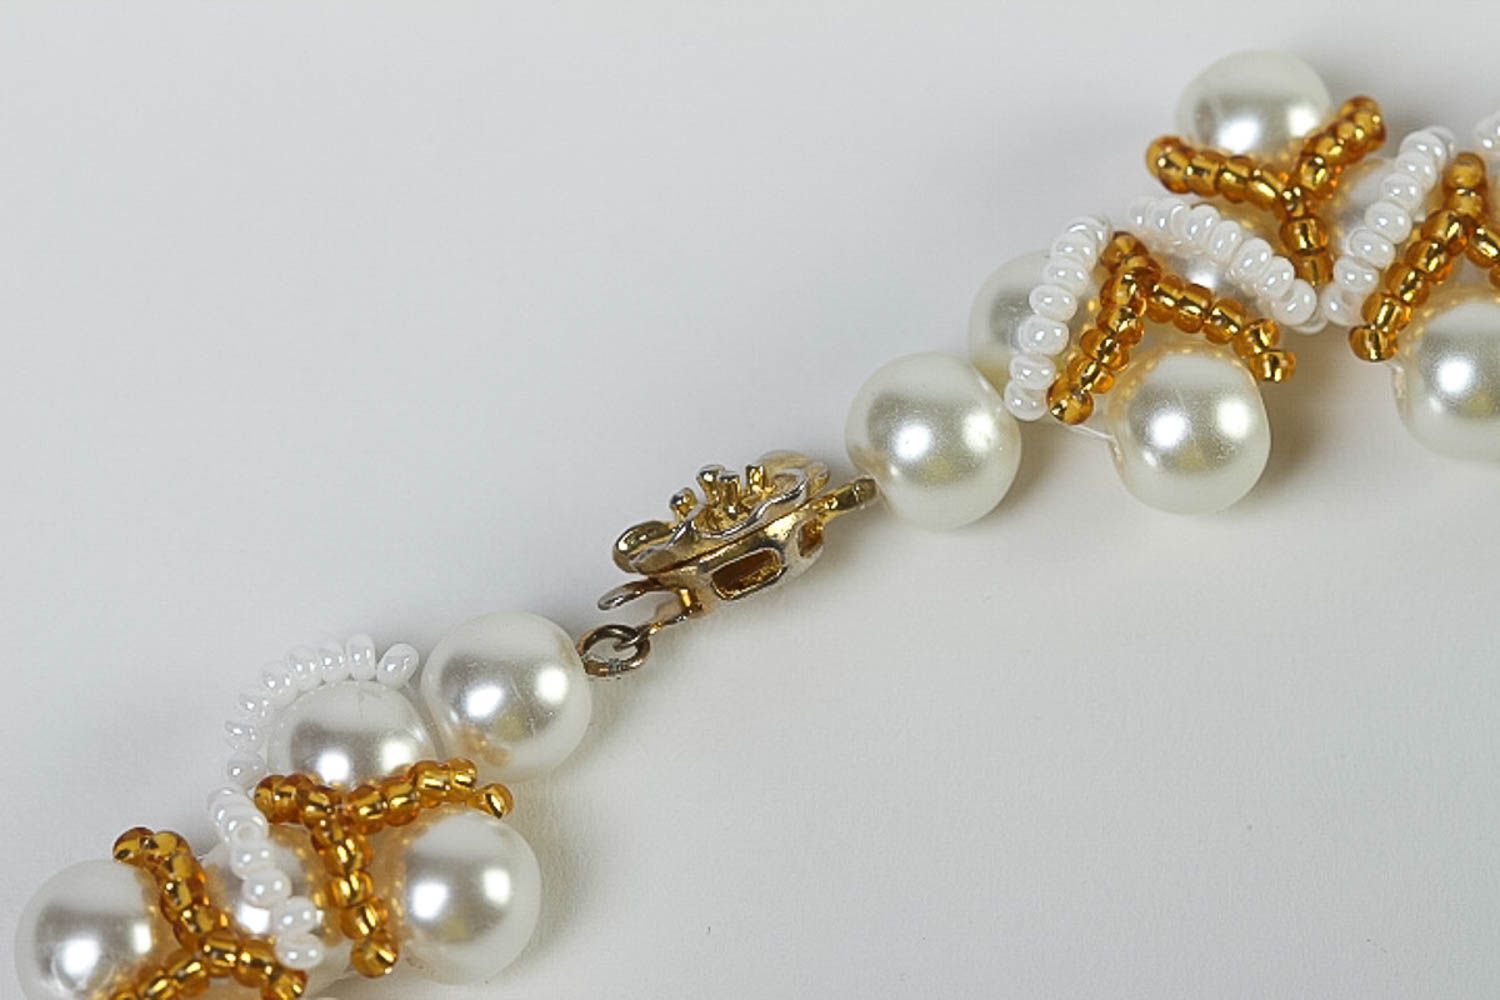 Beautiful handmade beaded necklace artisan jewelry designs bead weaving ideas photo 4